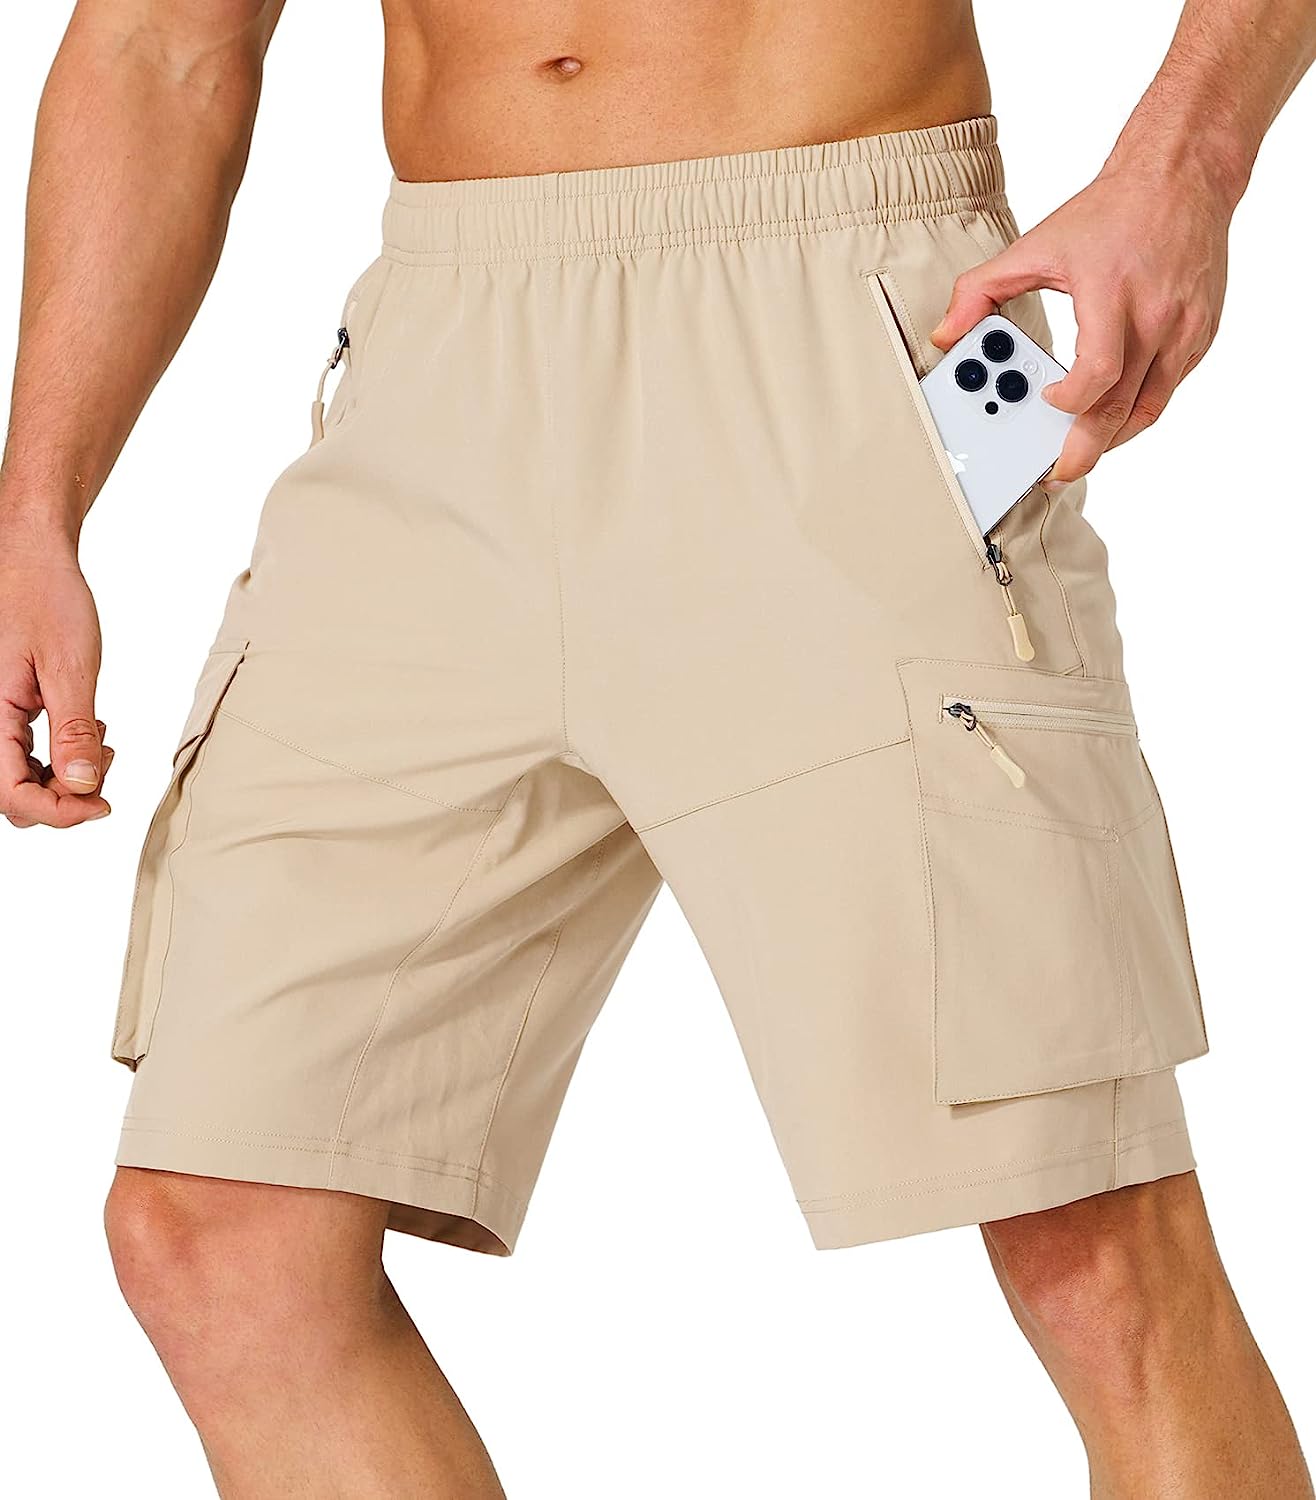 S Spowind Men's Hiking Cargo Shorts Quick Dry Lightweight Summer Travel  Shorts w